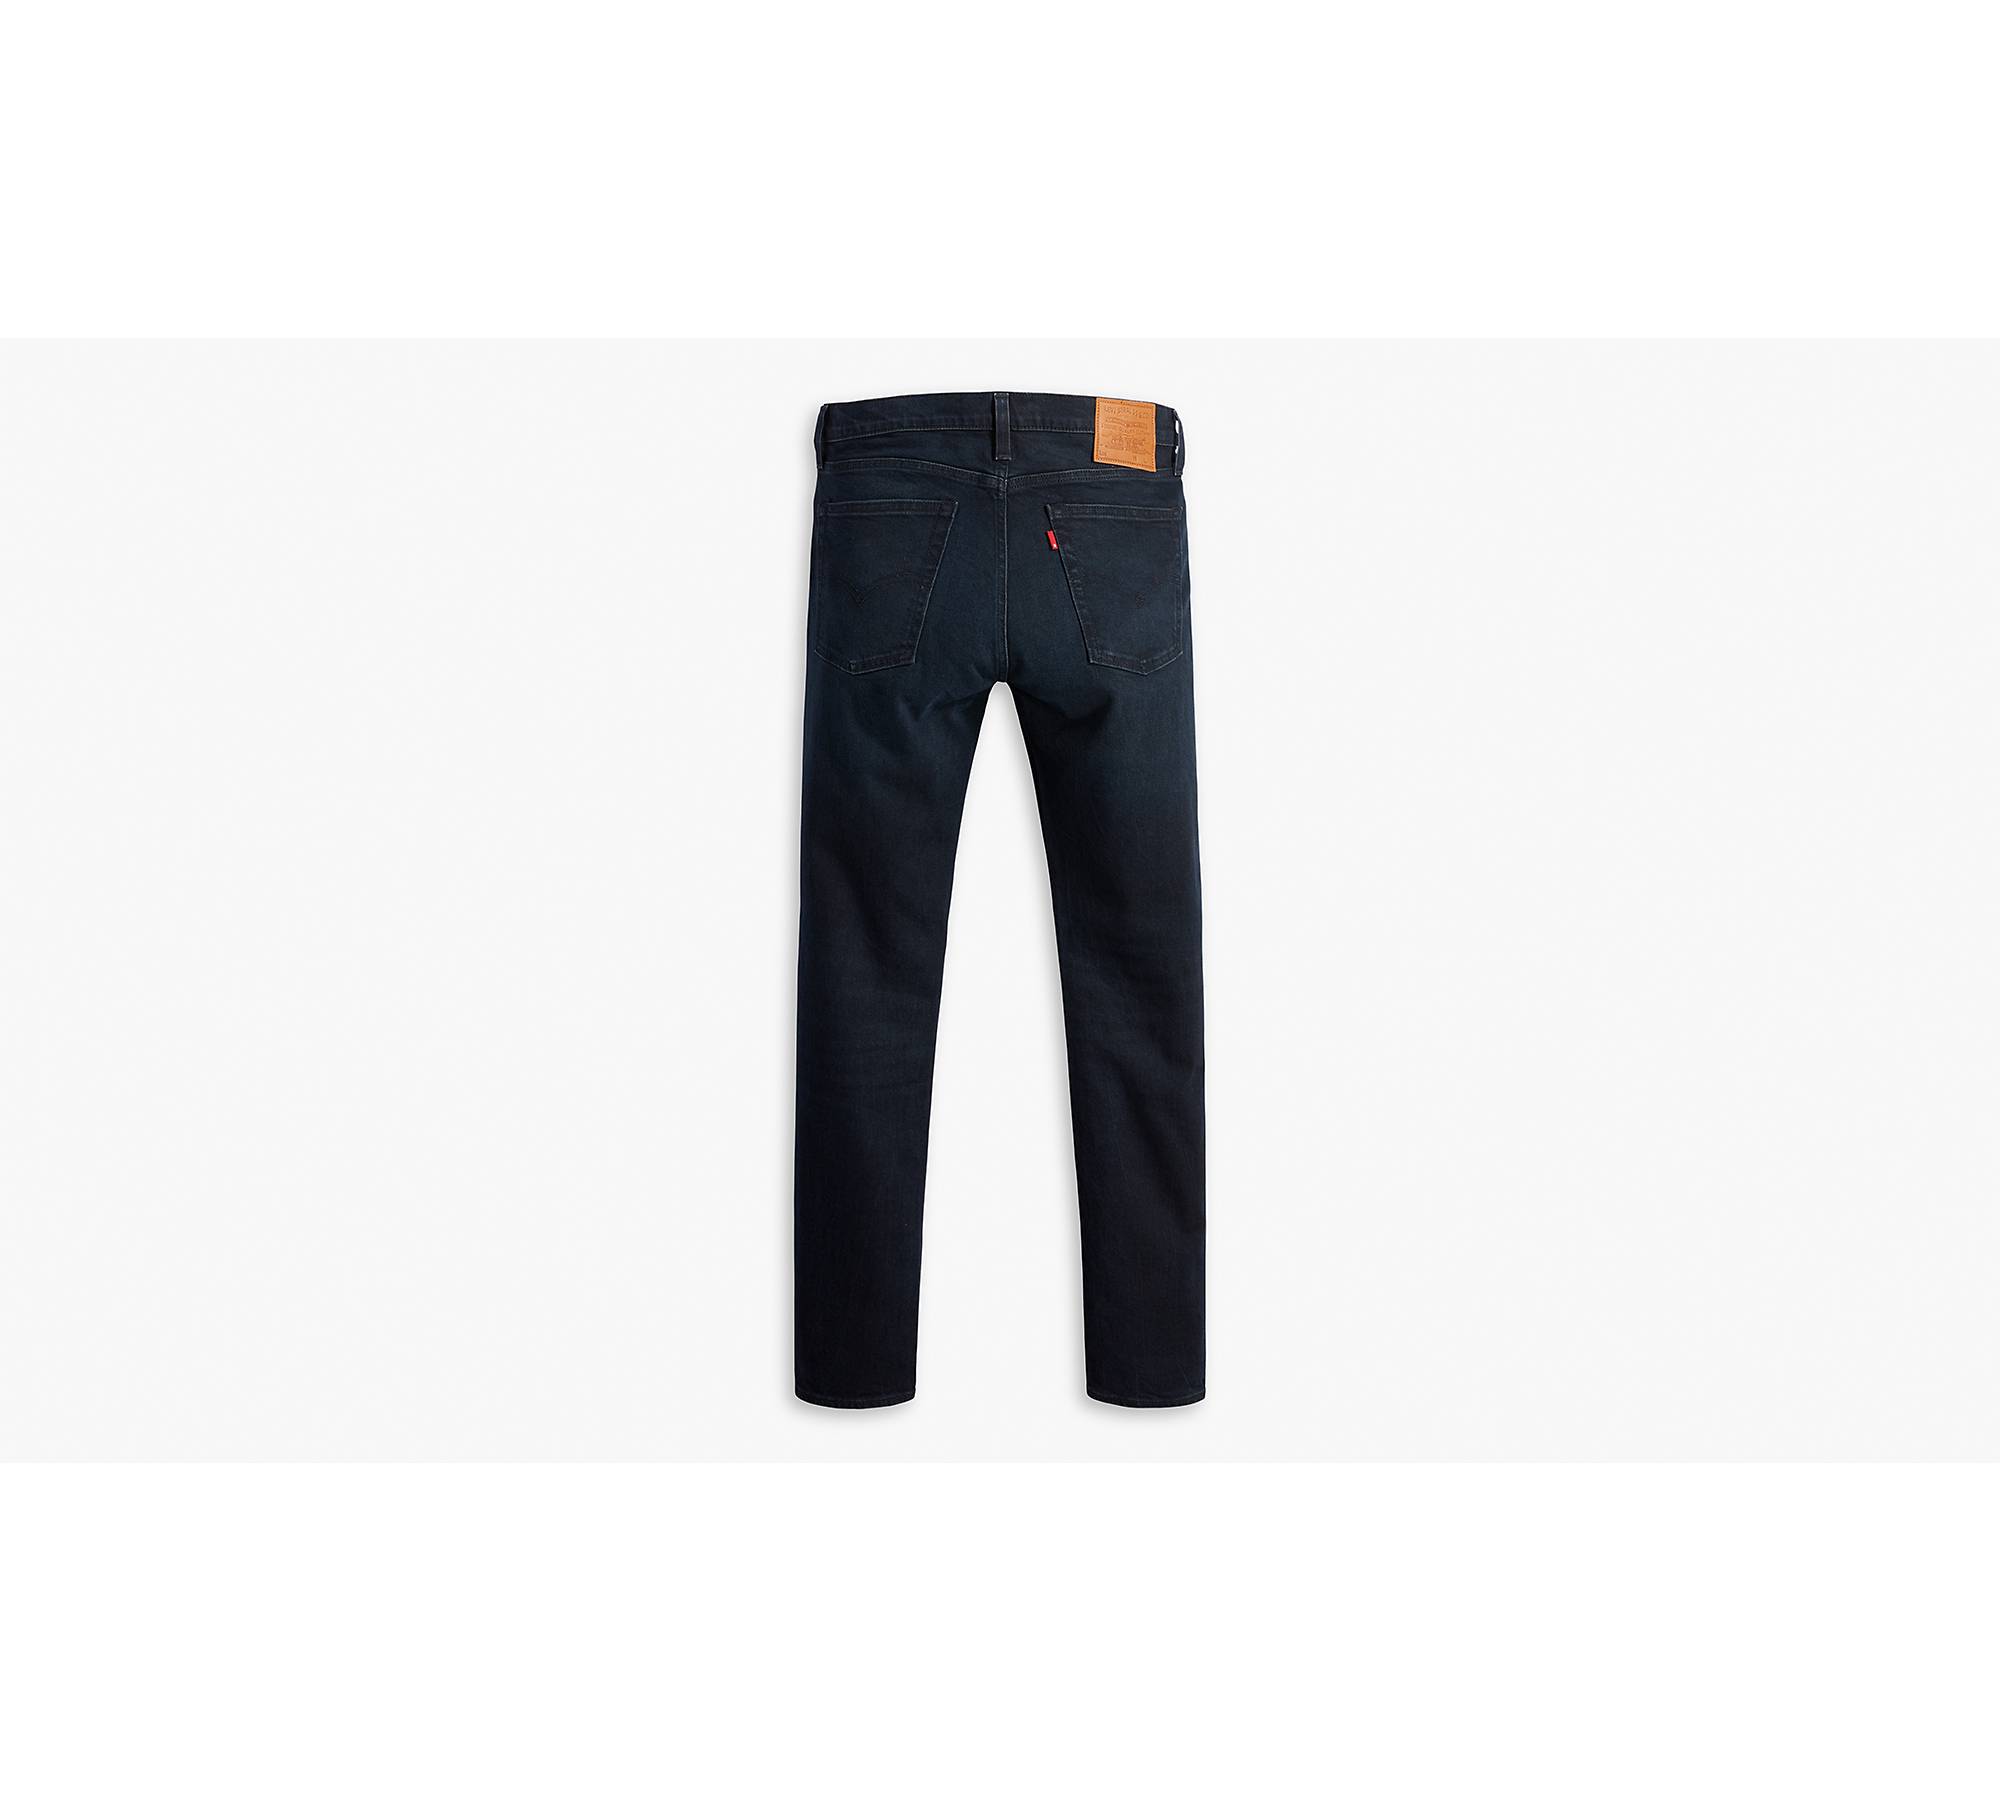 Lille bitte jurist tunnel 510™ Skinny Fit Men's Jeans - Blue | Levi's® US